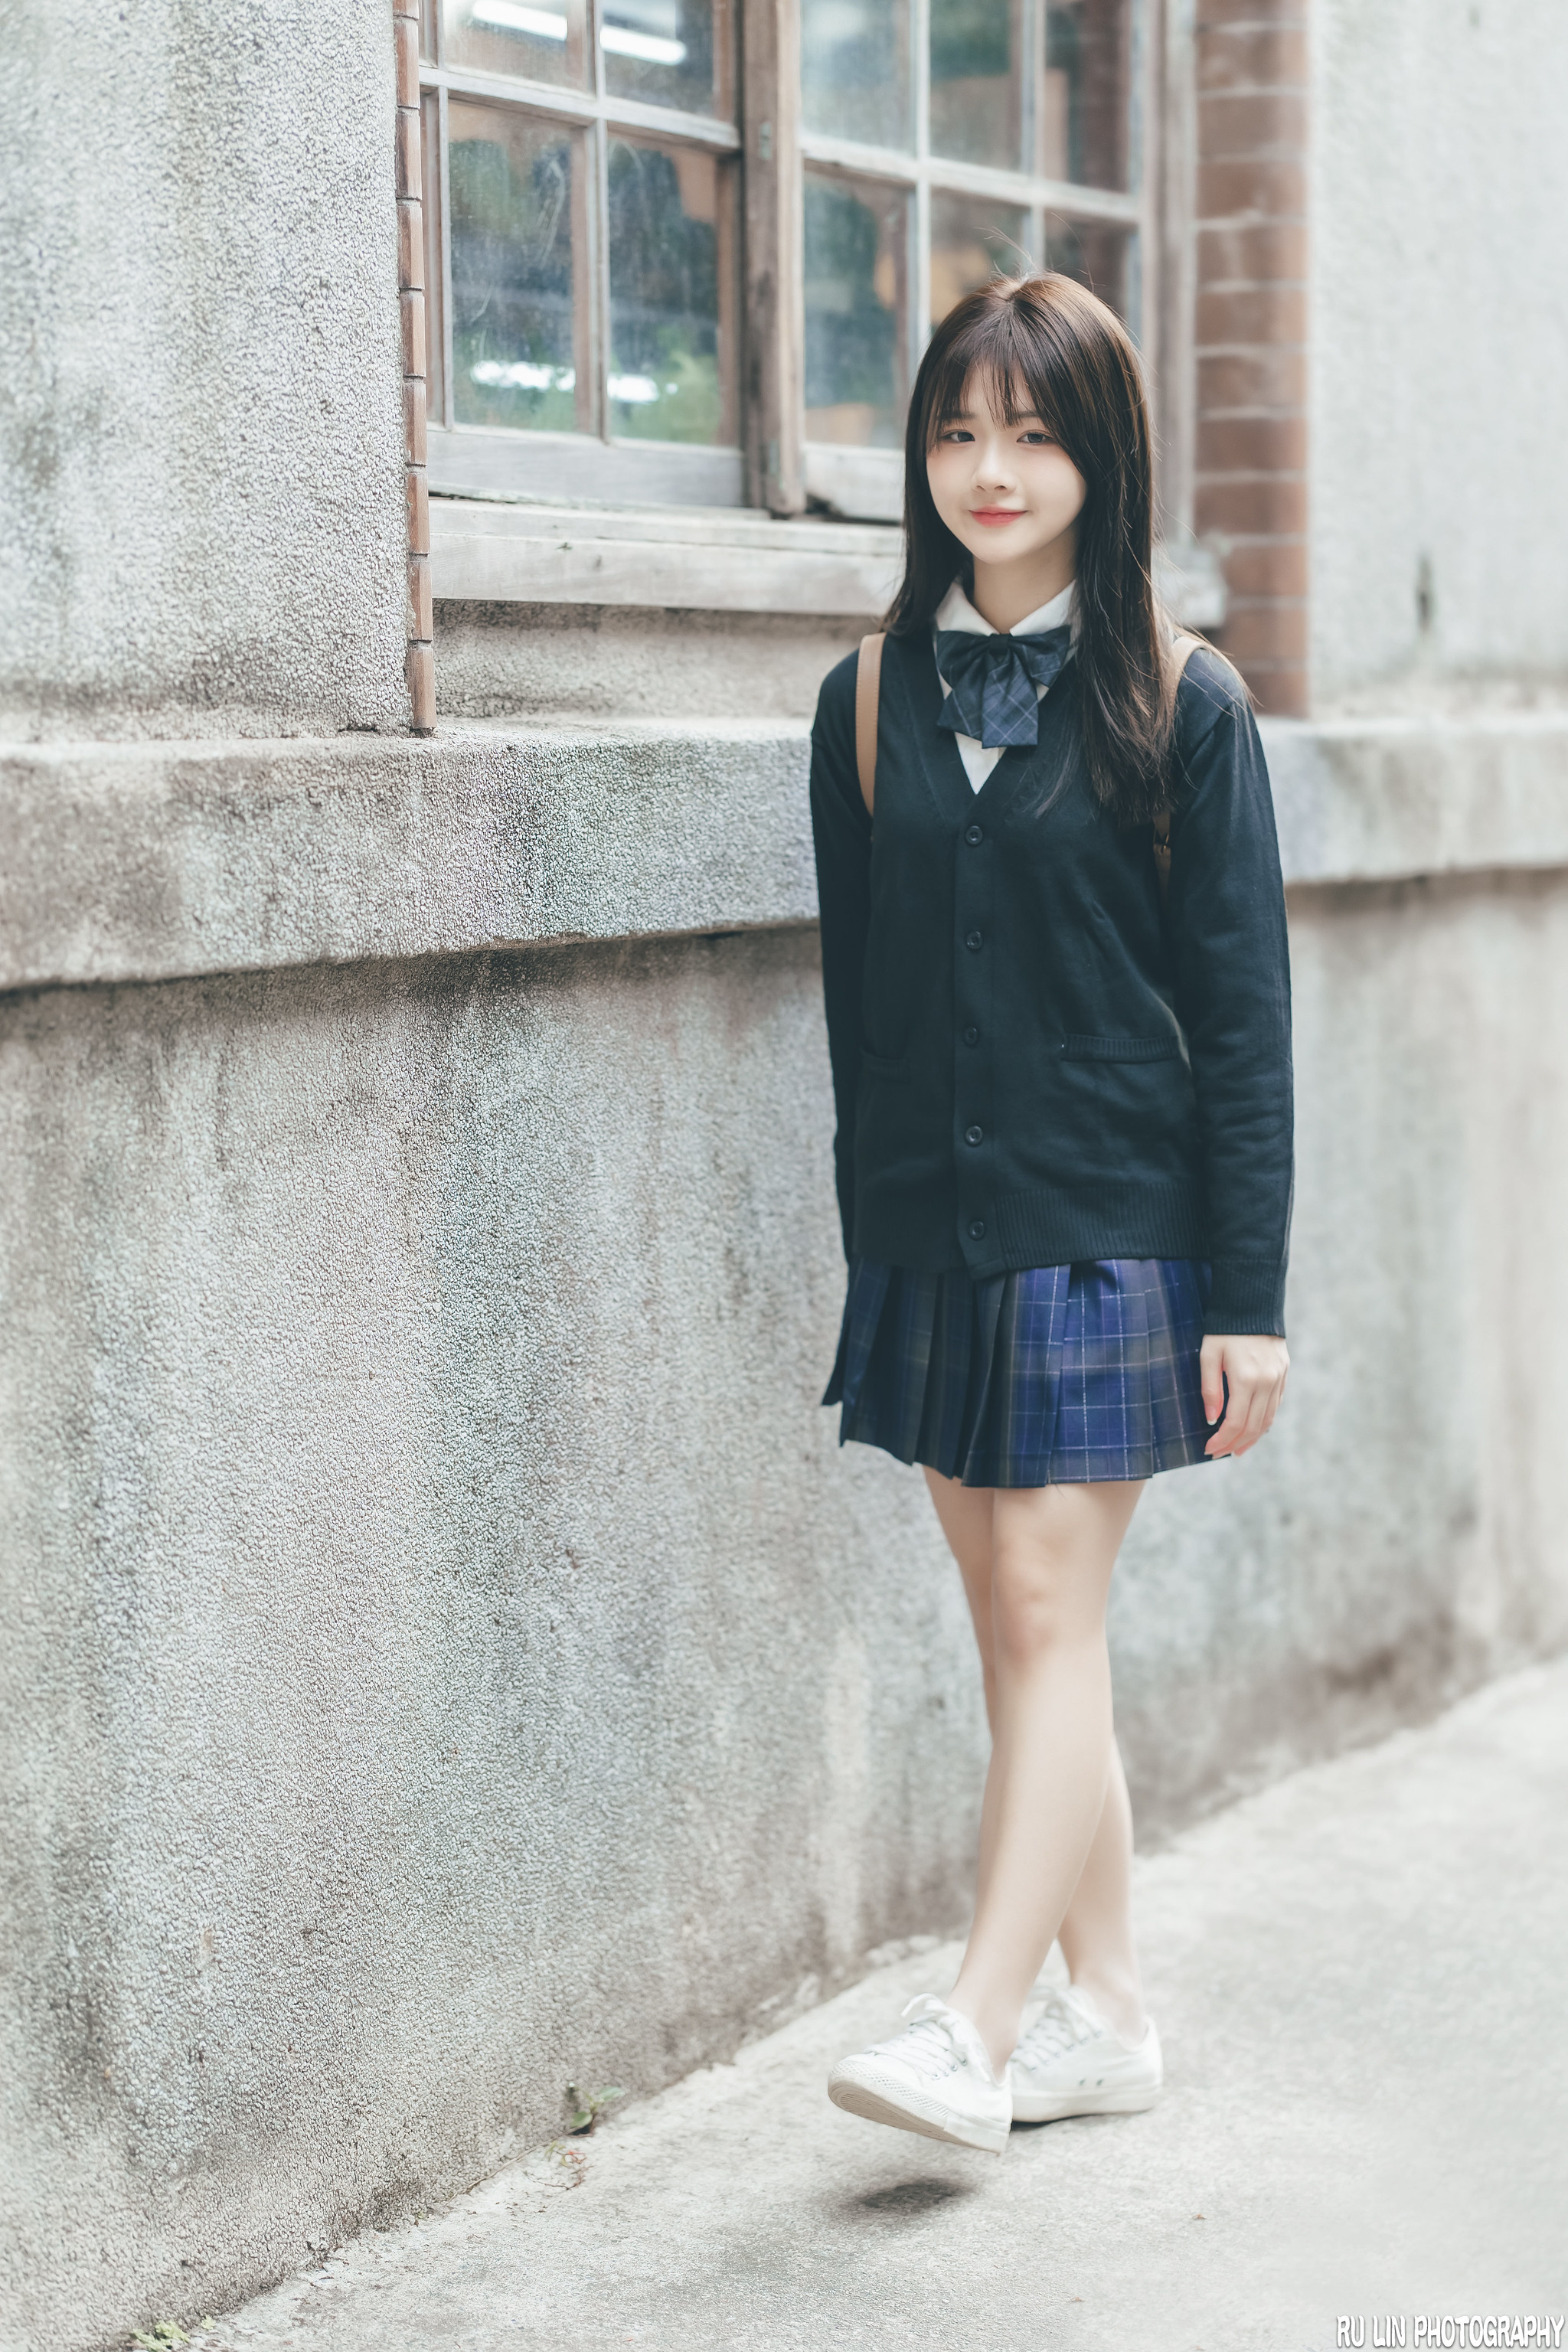 Women Asian Brunette Shirt Skirt Schoolgirl Walking Smiling Outdoors Ru Lin 2048x3072